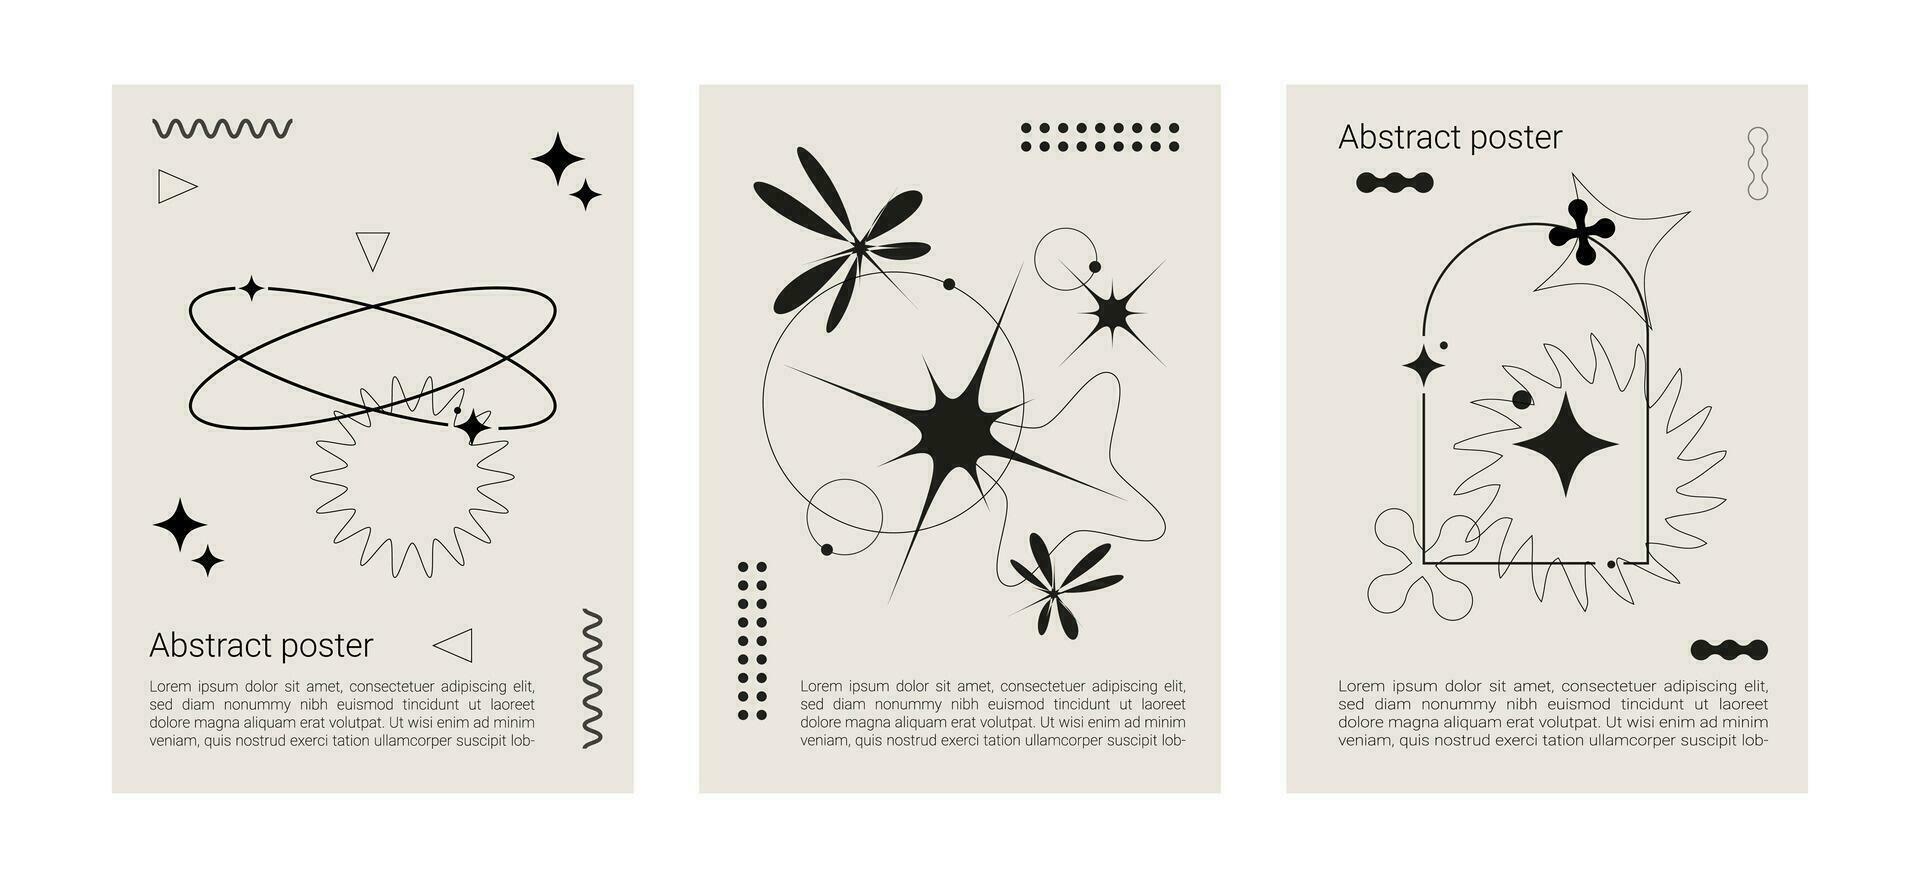 futurista Bauhaus carteles colocar. retro carteles con diferente geométrico elementos vector